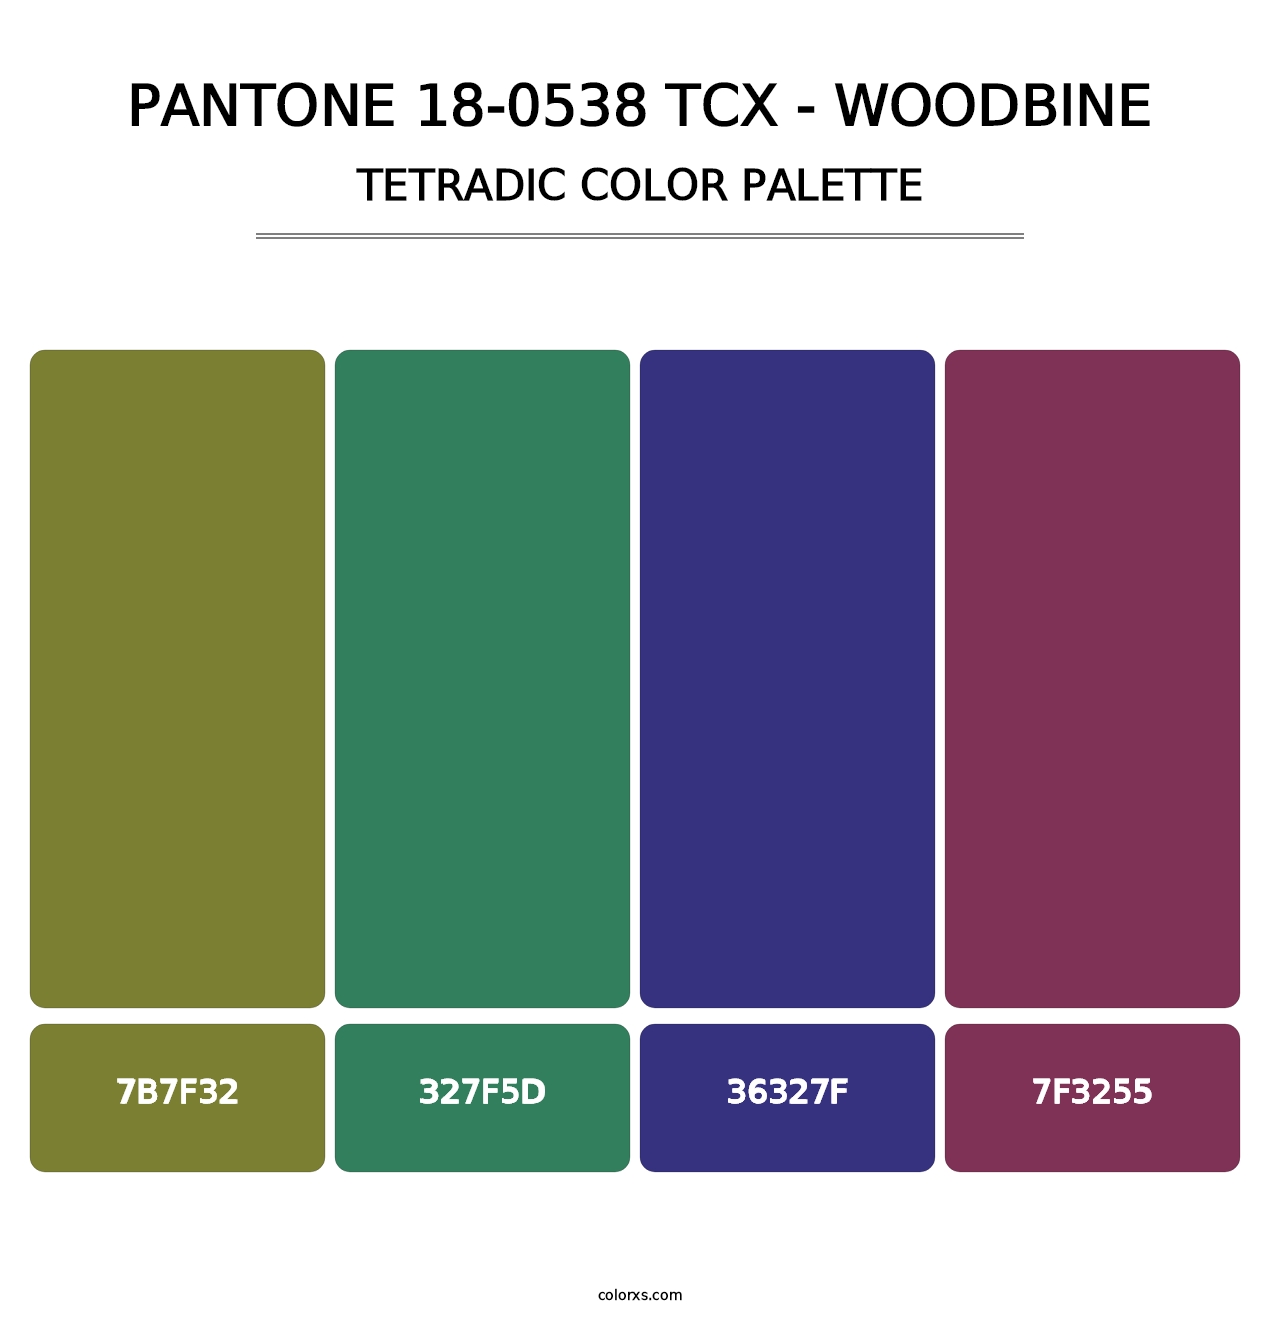 PANTONE 18-0538 TCX - Woodbine - Tetradic Color Palette